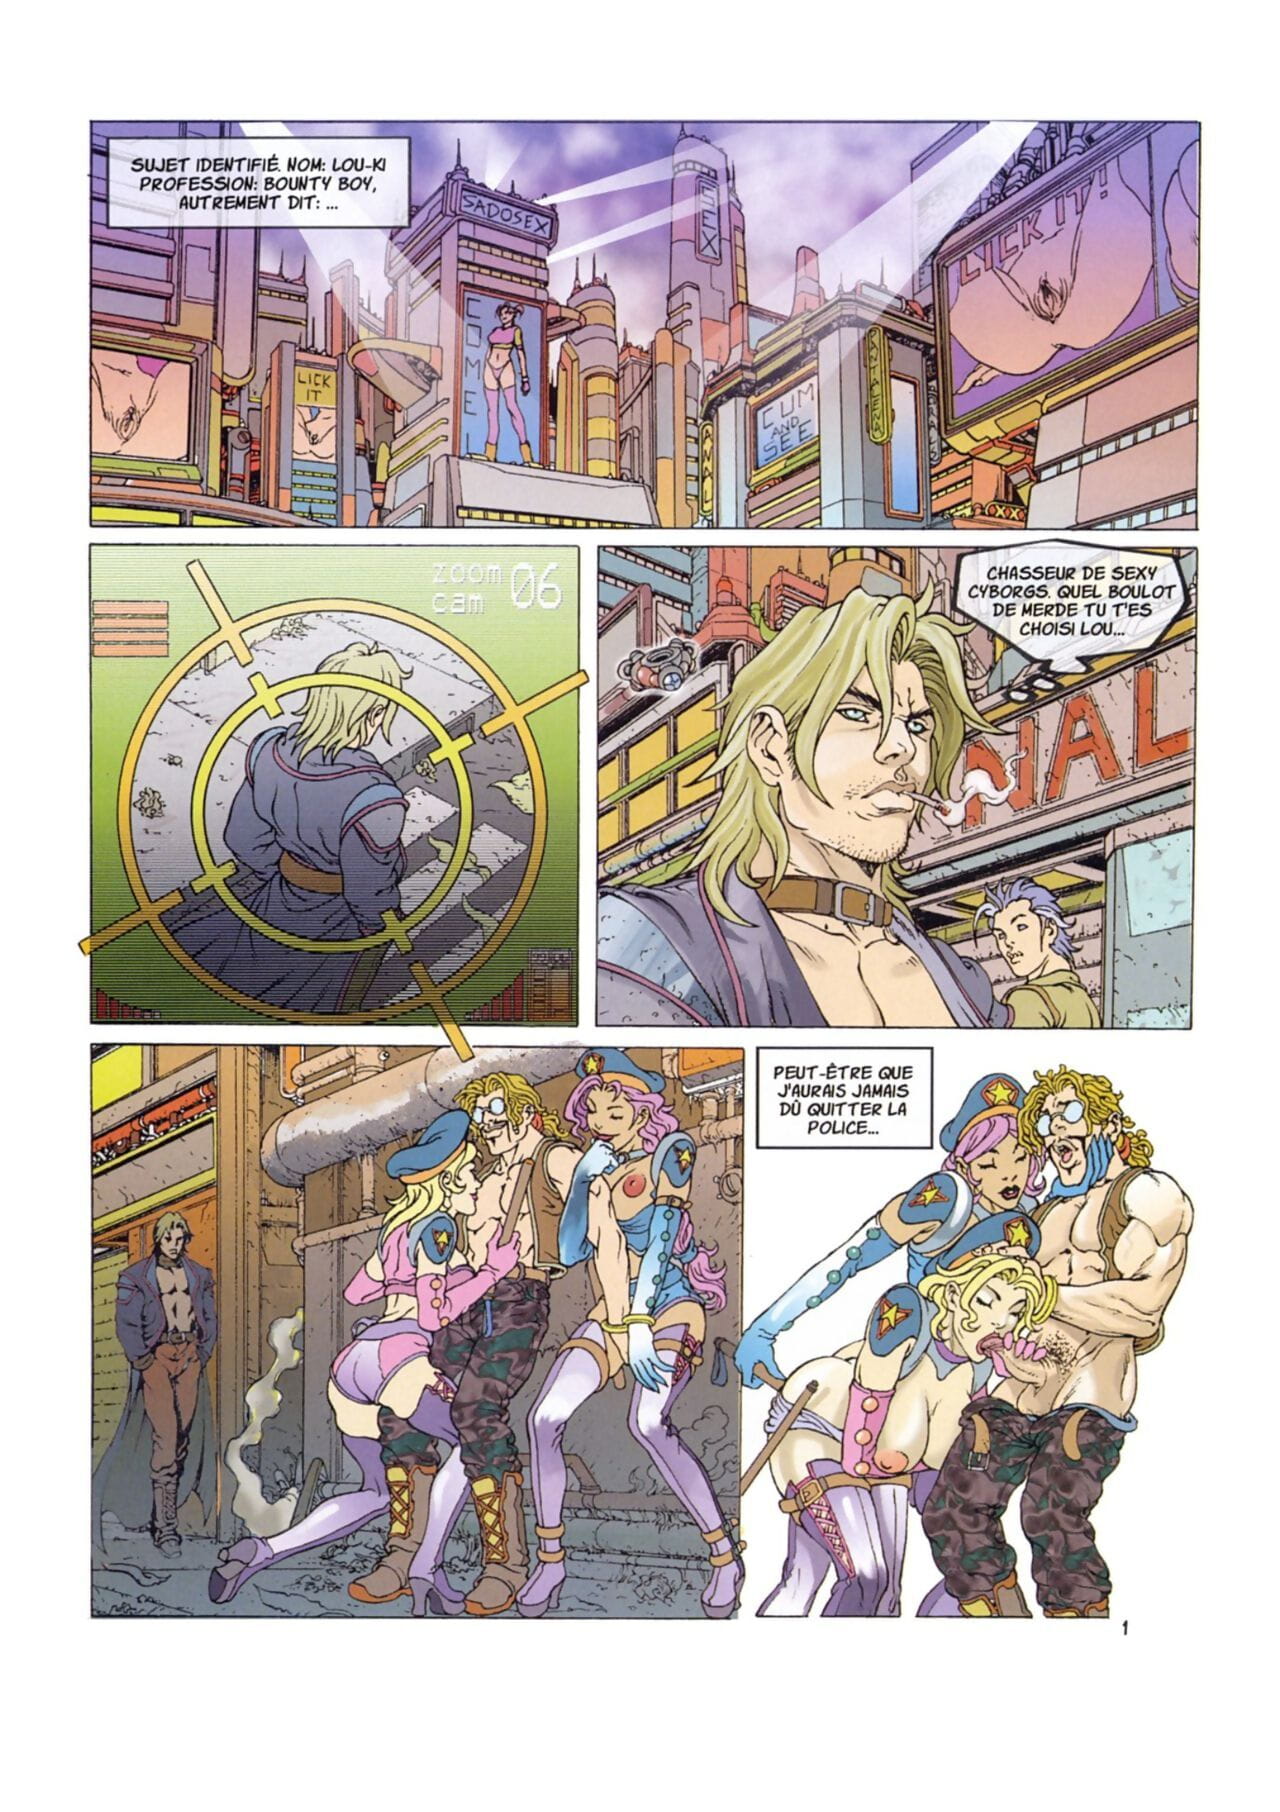 Sexy cyborg page 1